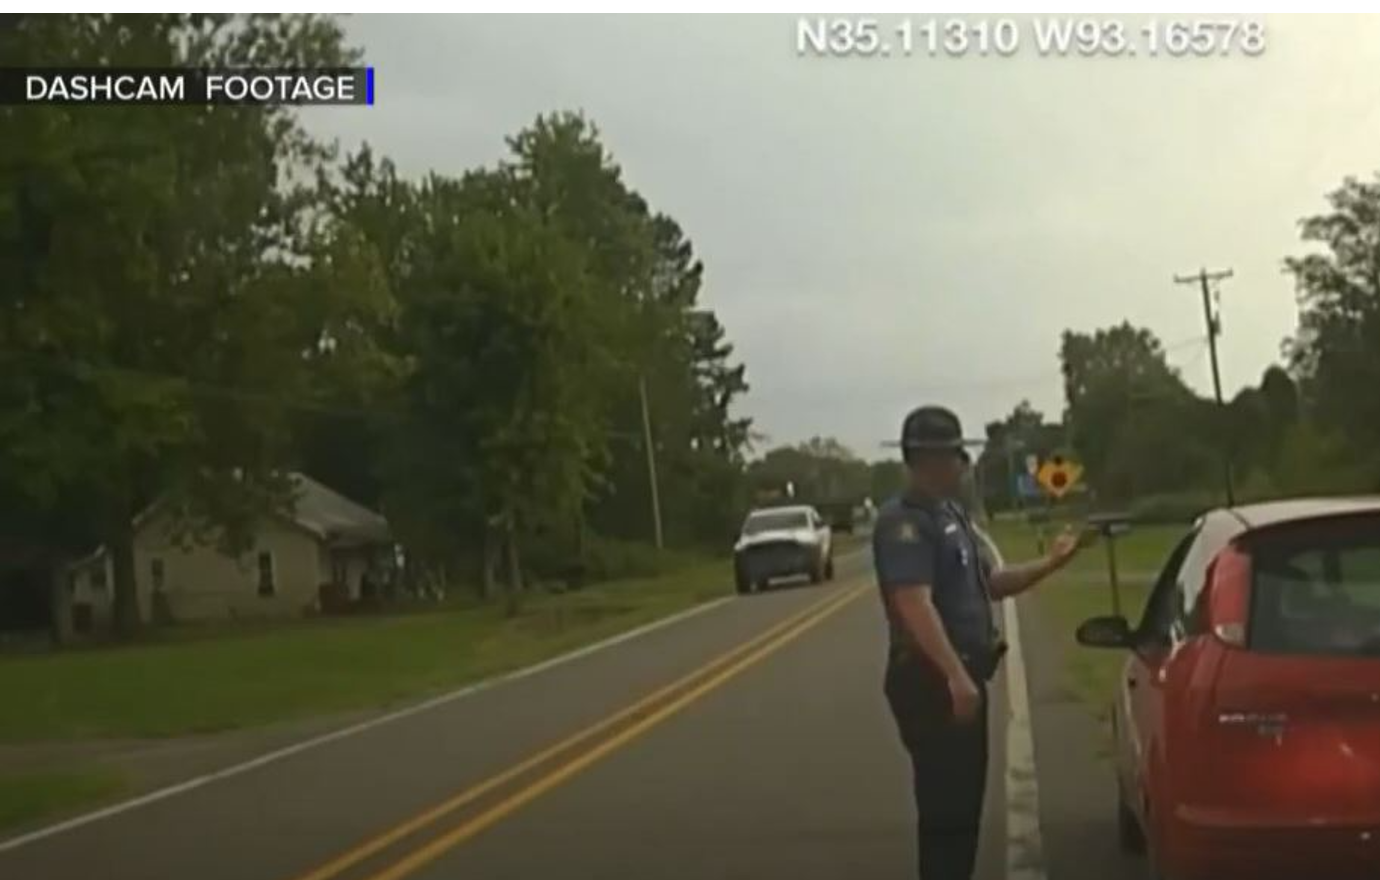 Police Dashcam Footage Captures Runaway Driver Fleeing Officer